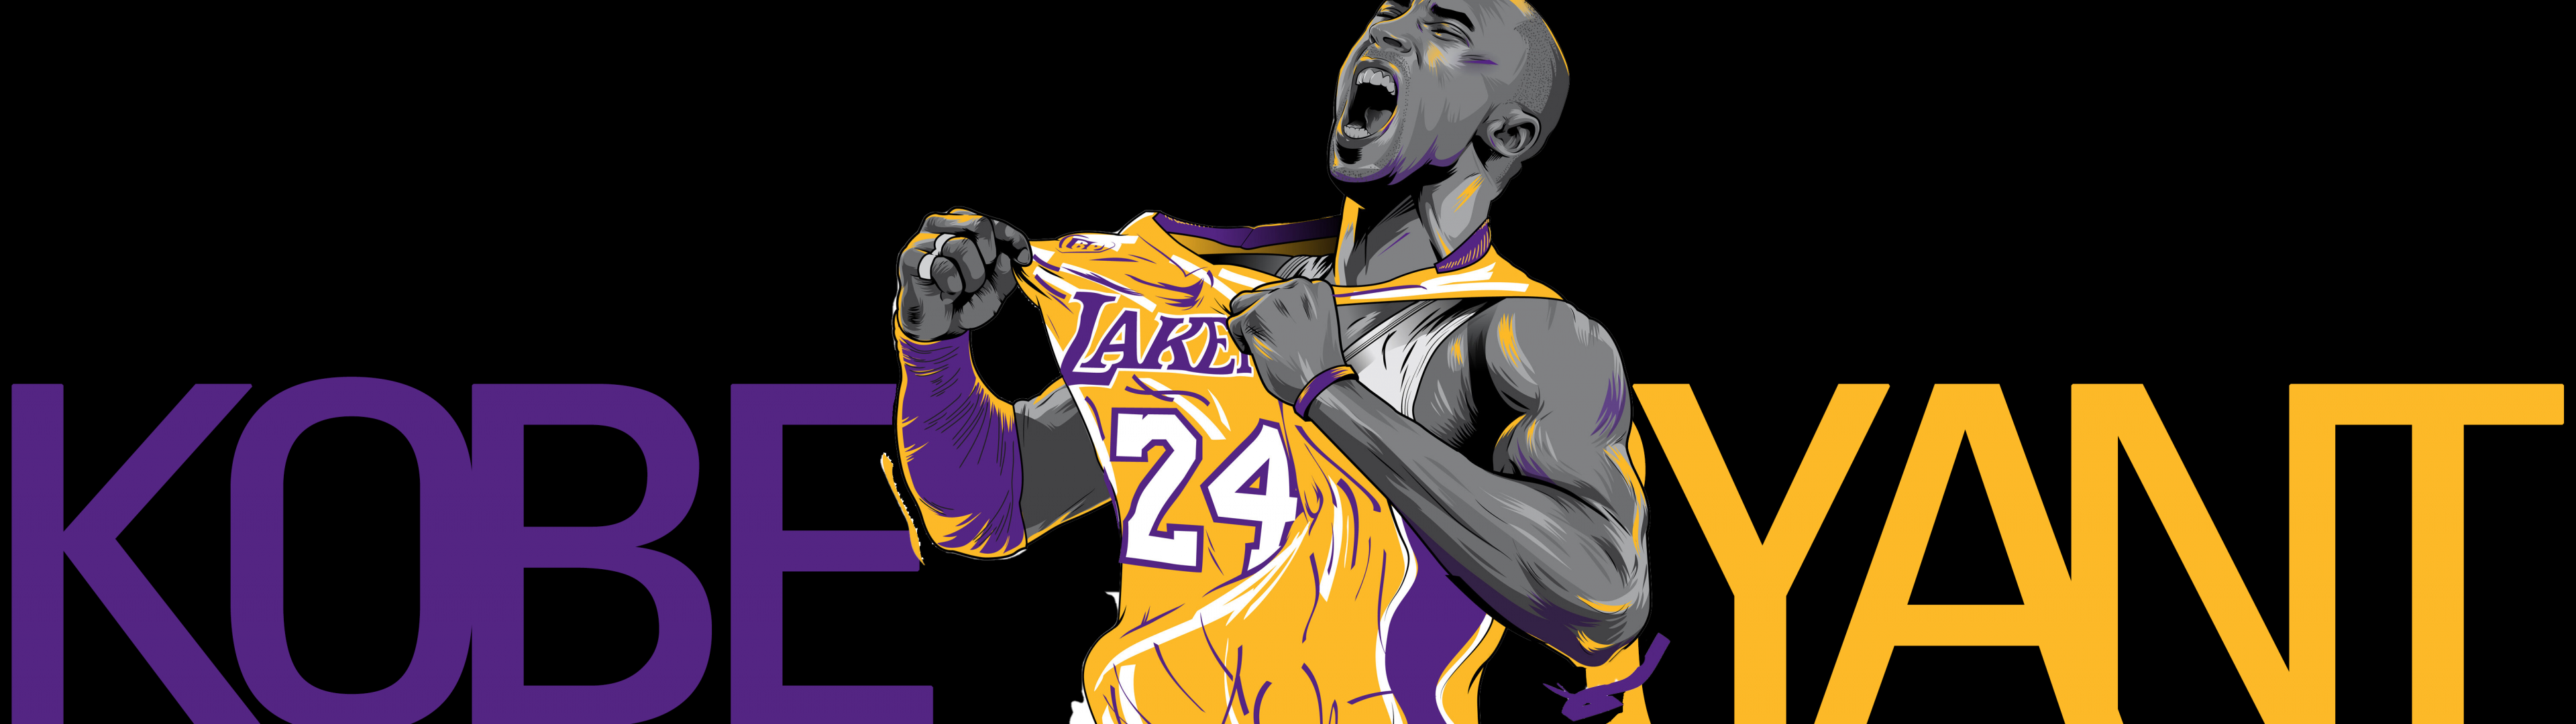 HD wallpaper: Kobe Bryant, NBA, Los Angeles Lakers, basketball